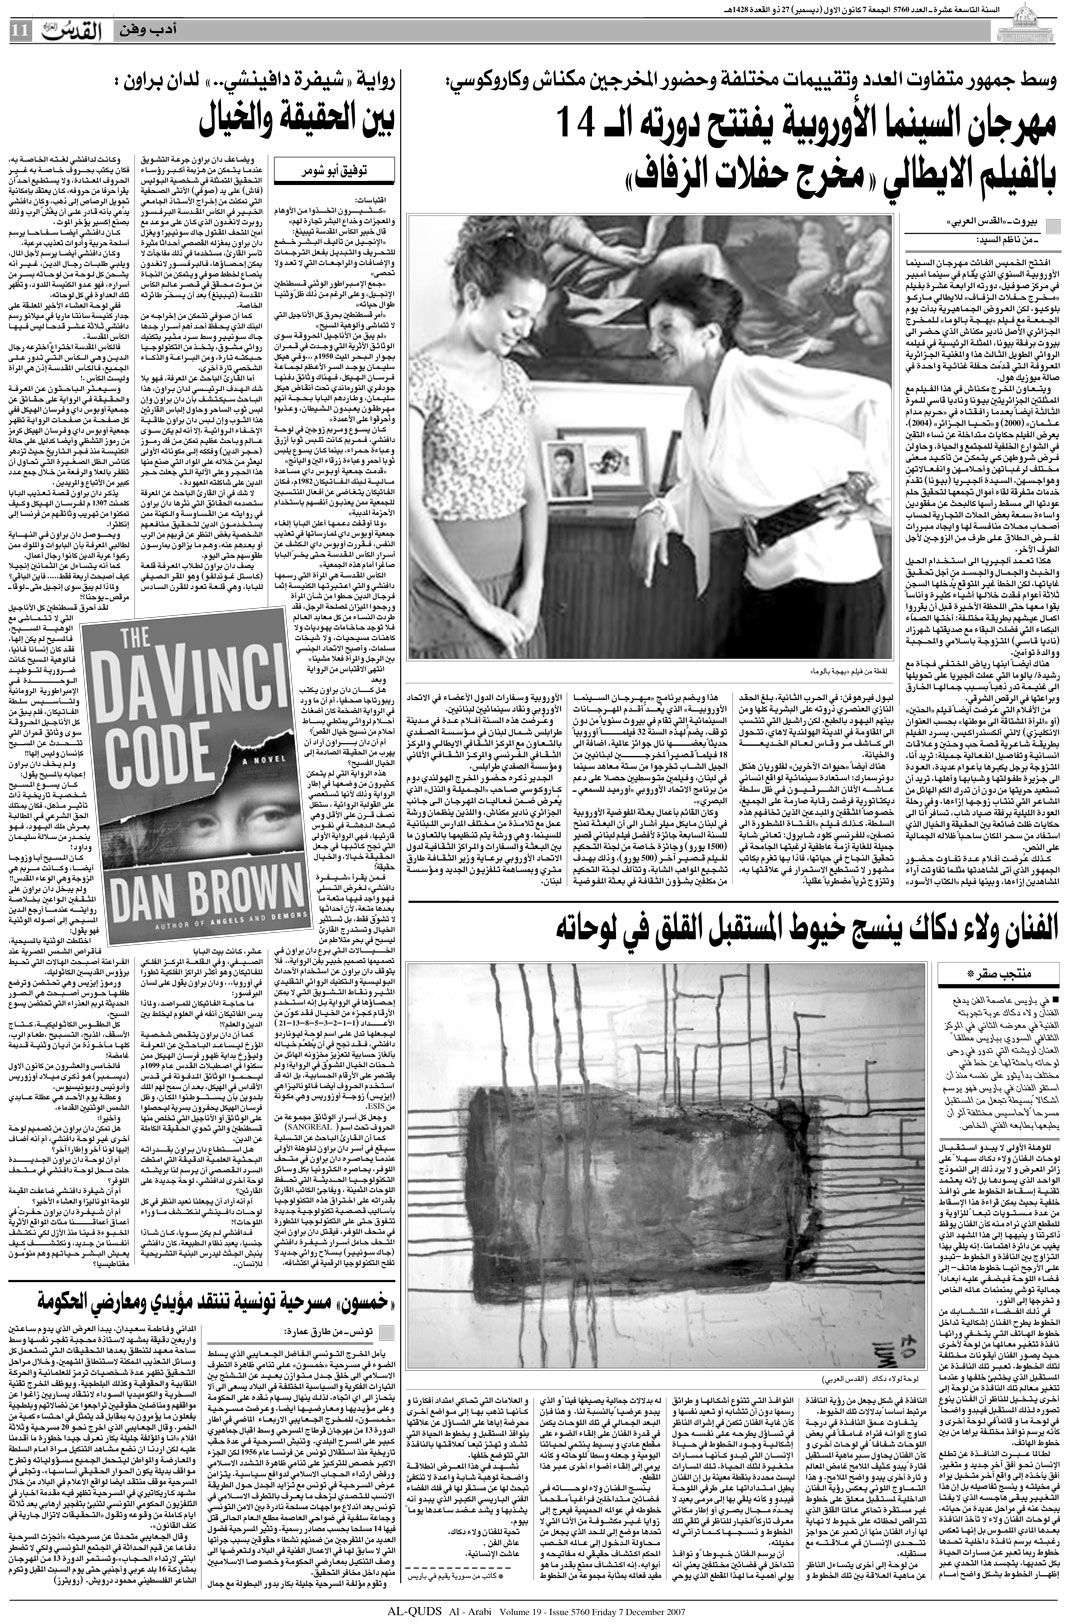 Walaa Dakak - Arabic daily newspaper